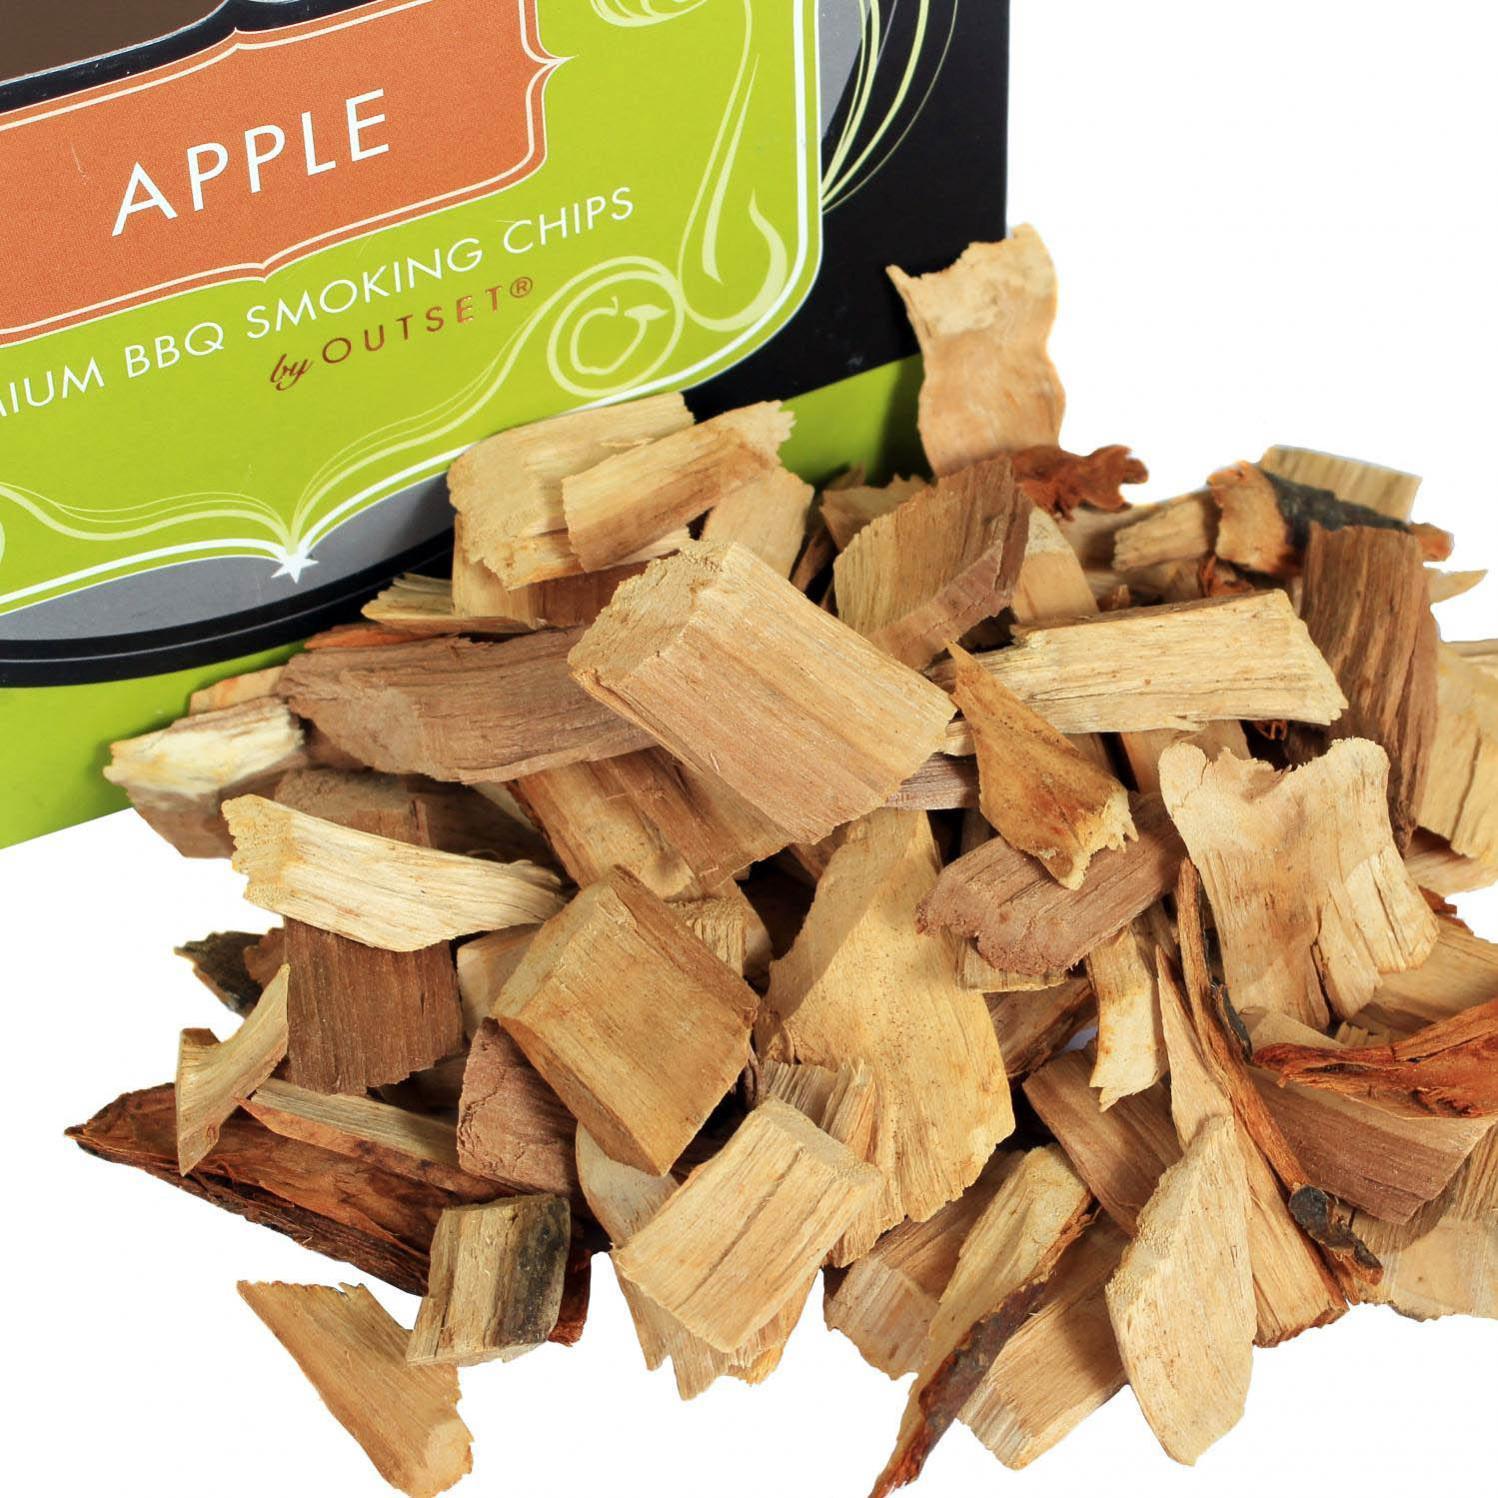 Apple Smoking Wood Chips - 150 Cu In : BBQ Guys